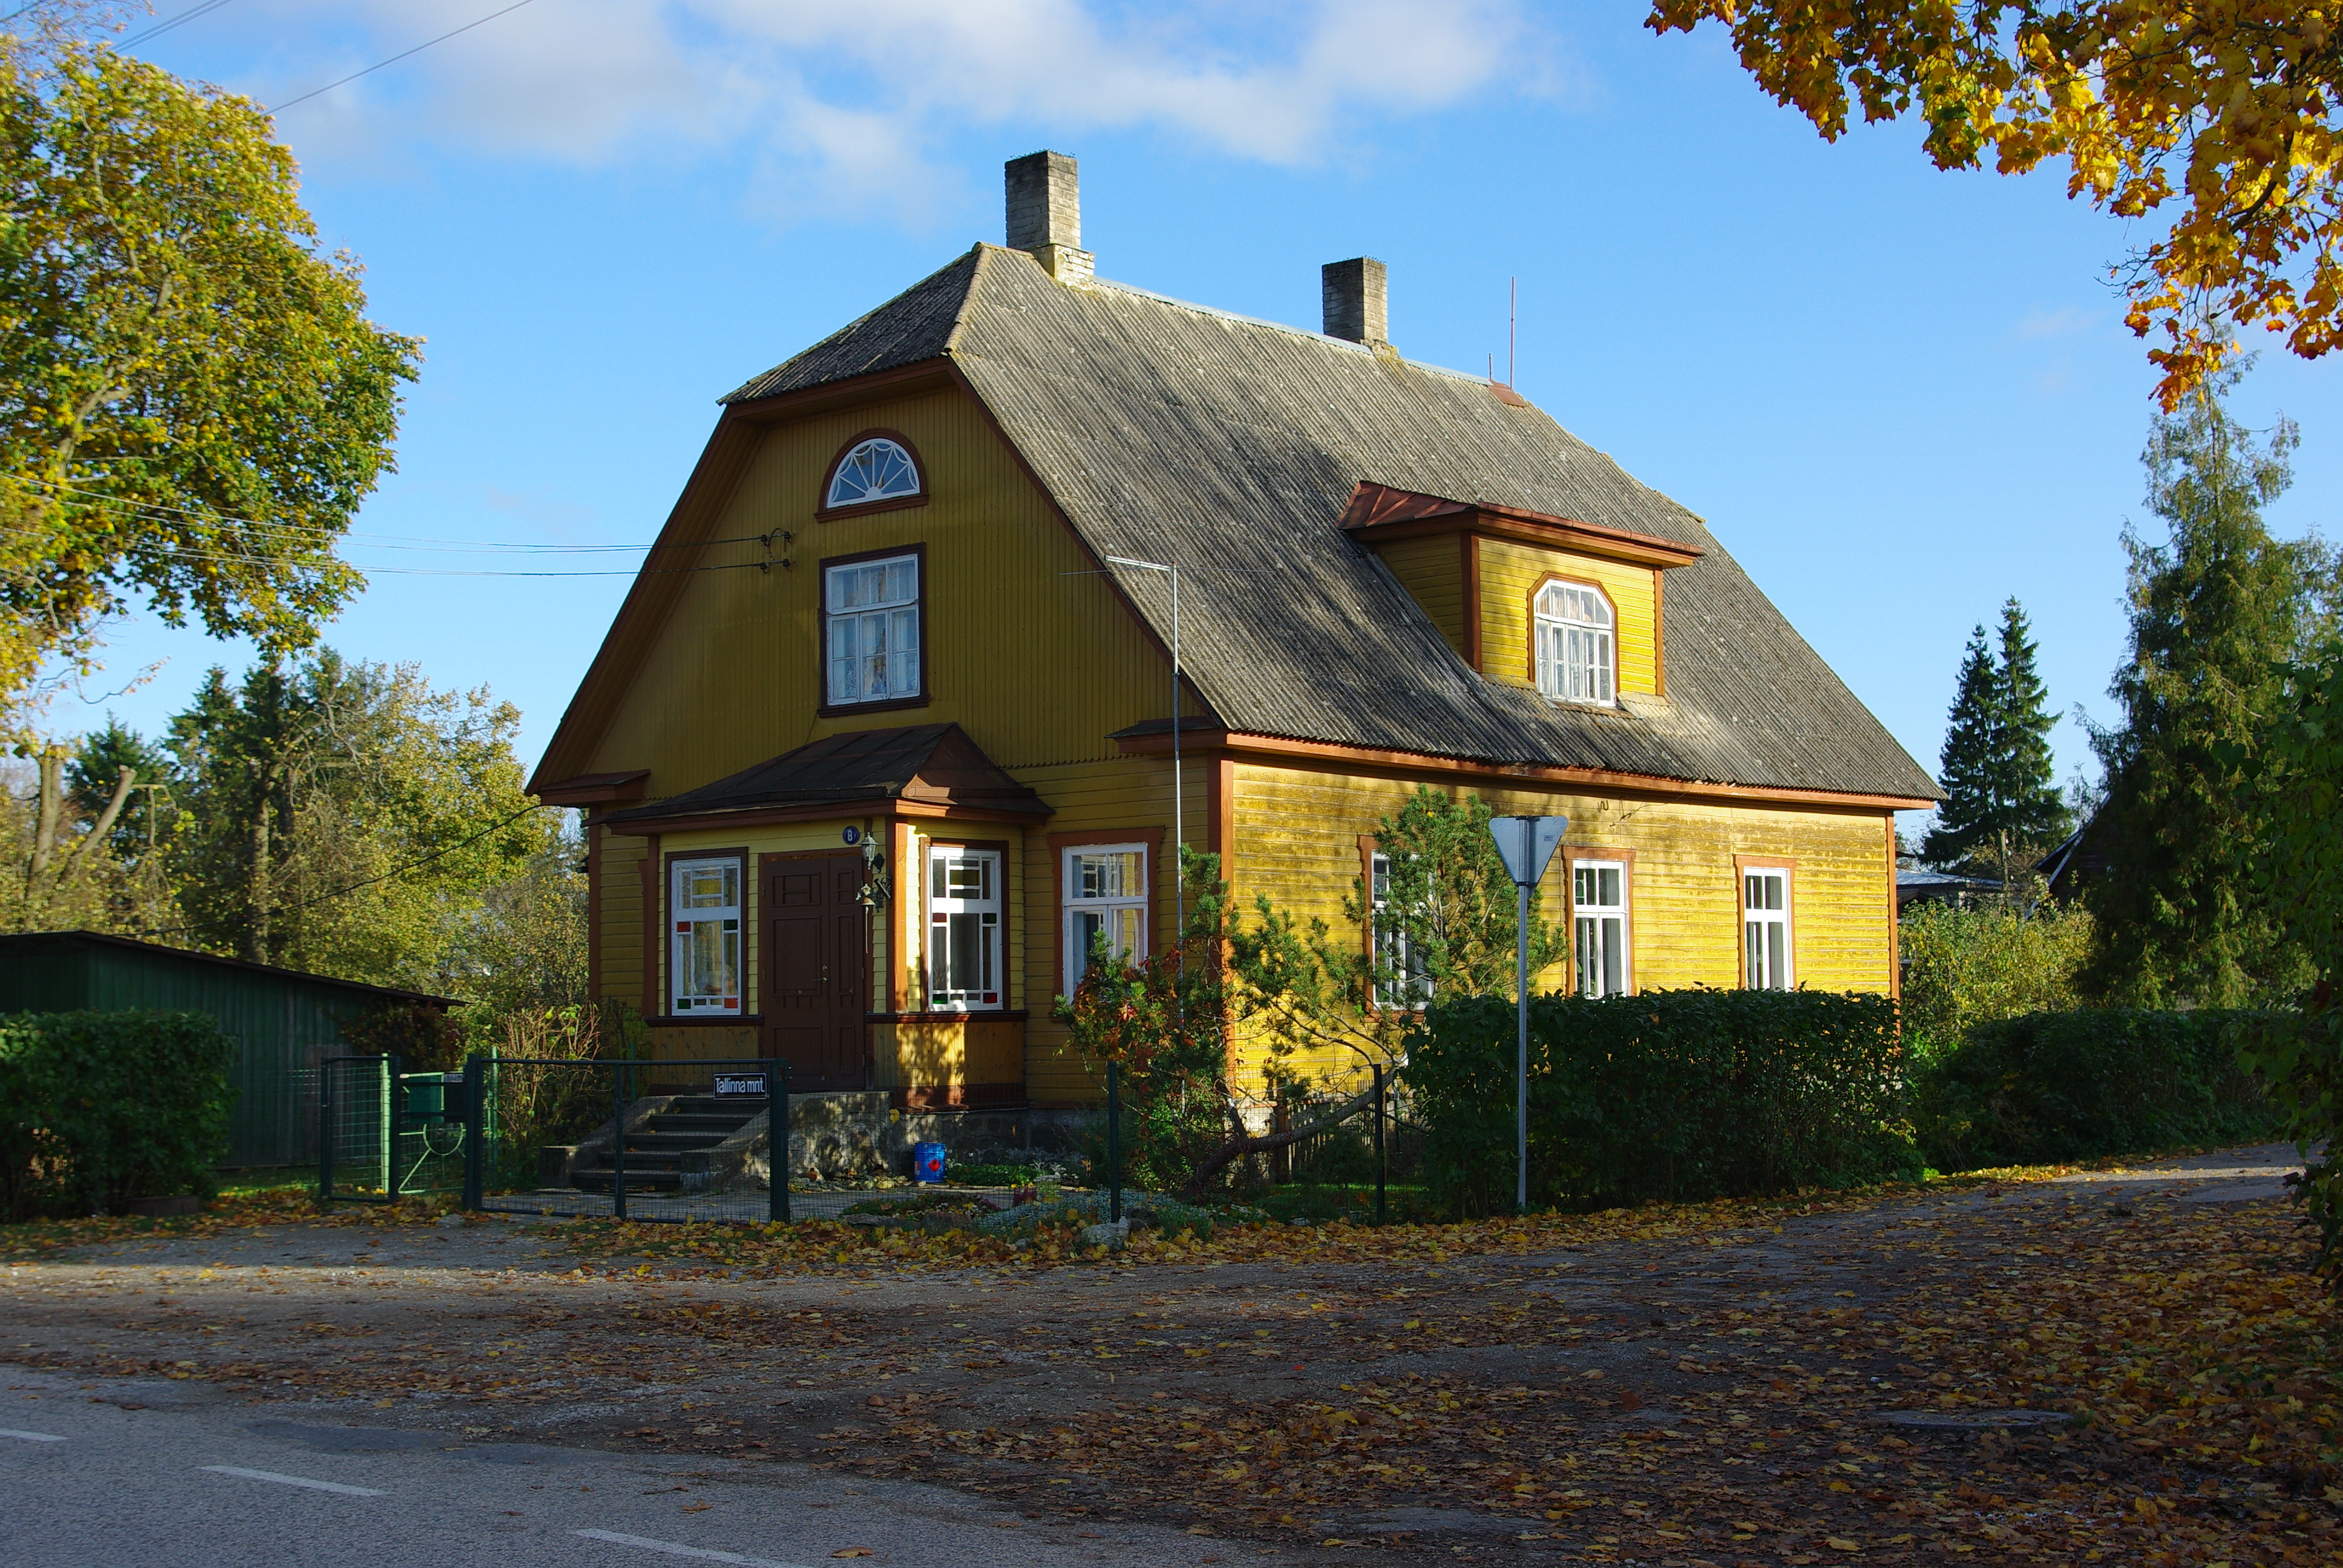 The former house of Raasiku Apteeg